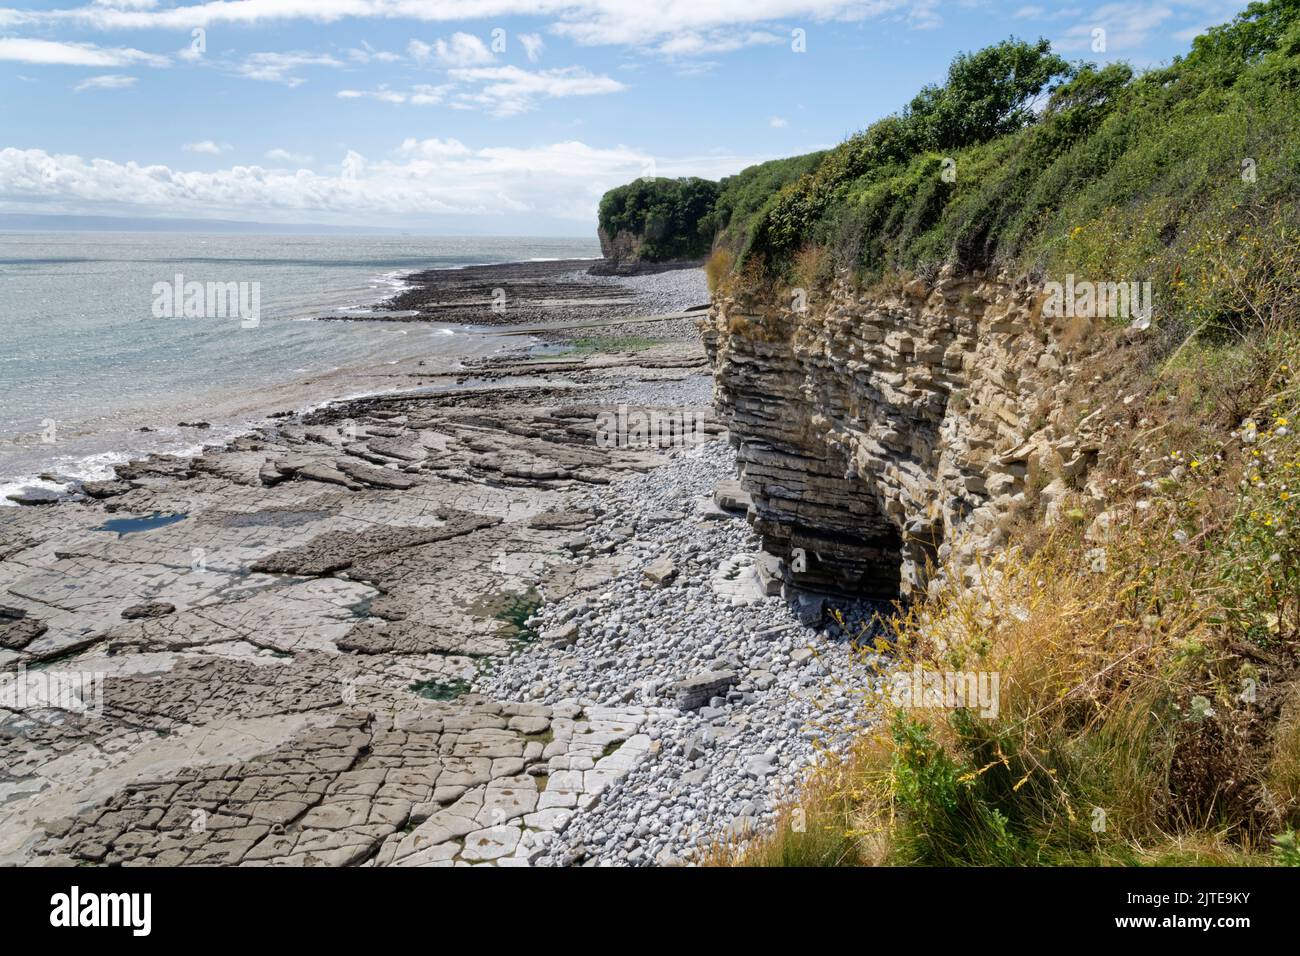 Limestone pavement and sea cliffs with layered rocks, Glamorgan Heritage Coast, near St. Donat’s, South Wales, UK, August. Stock Photo